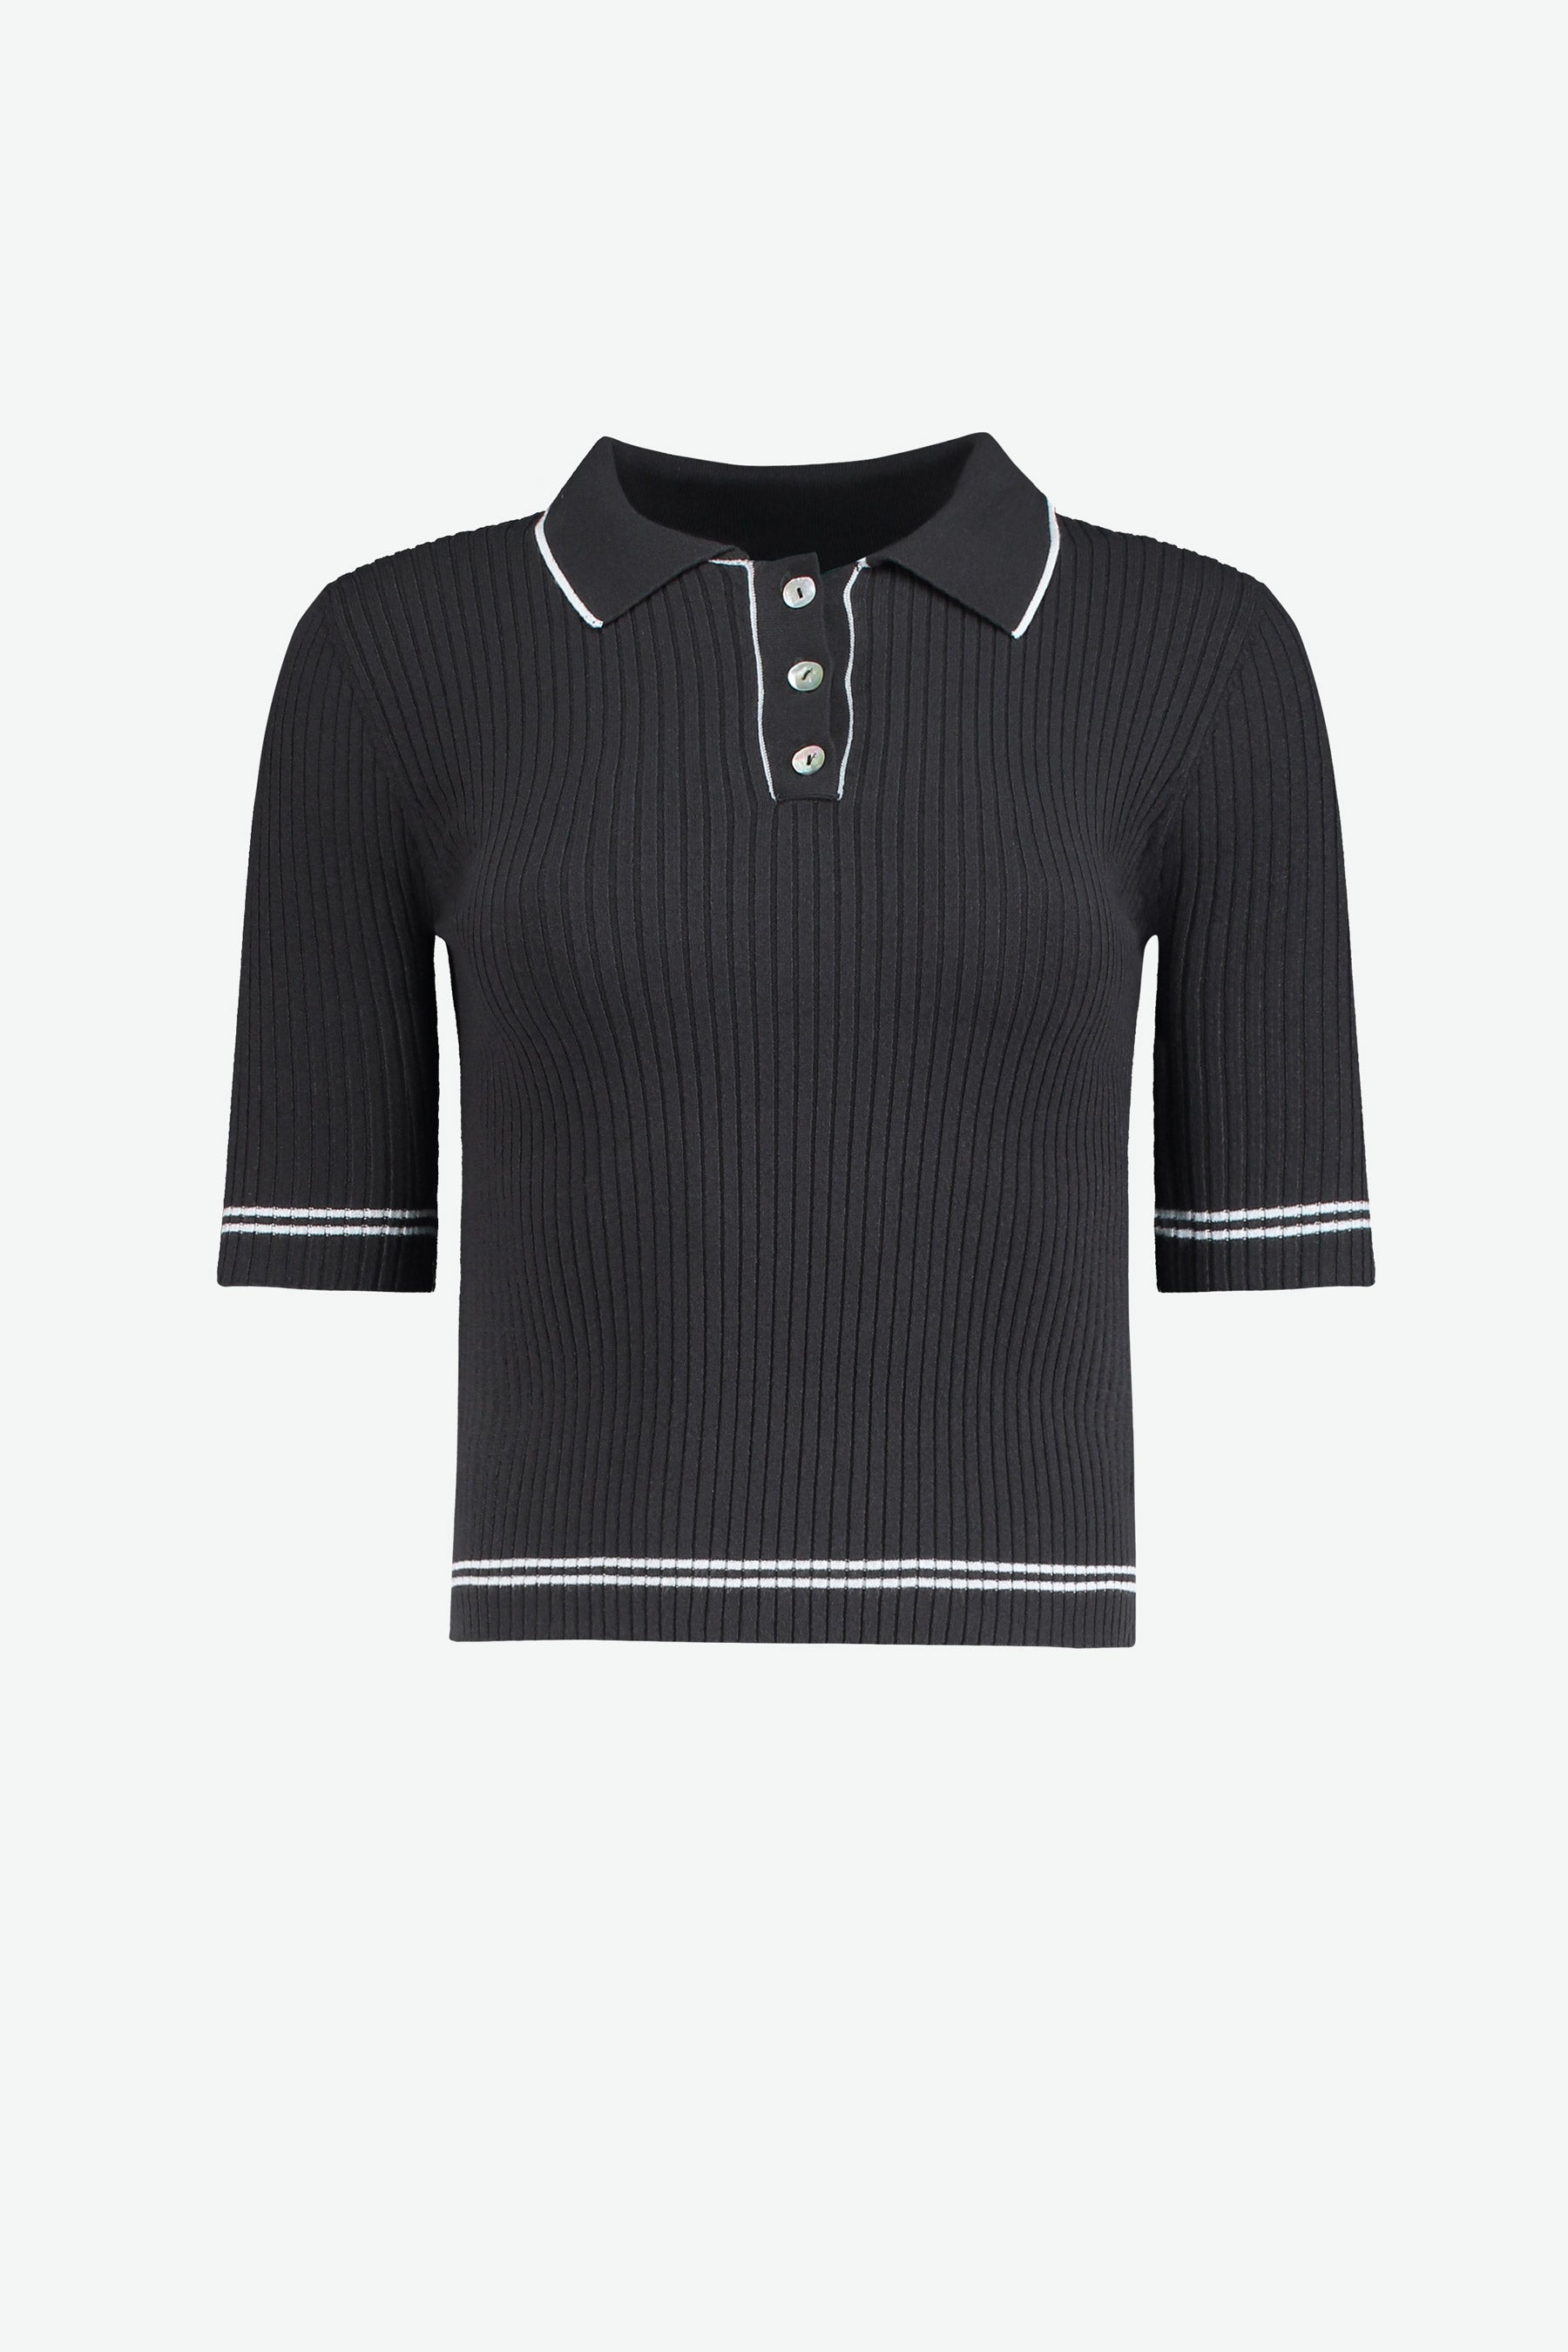 PRE ORDER – Amber Polo Shirt in Ebano Black